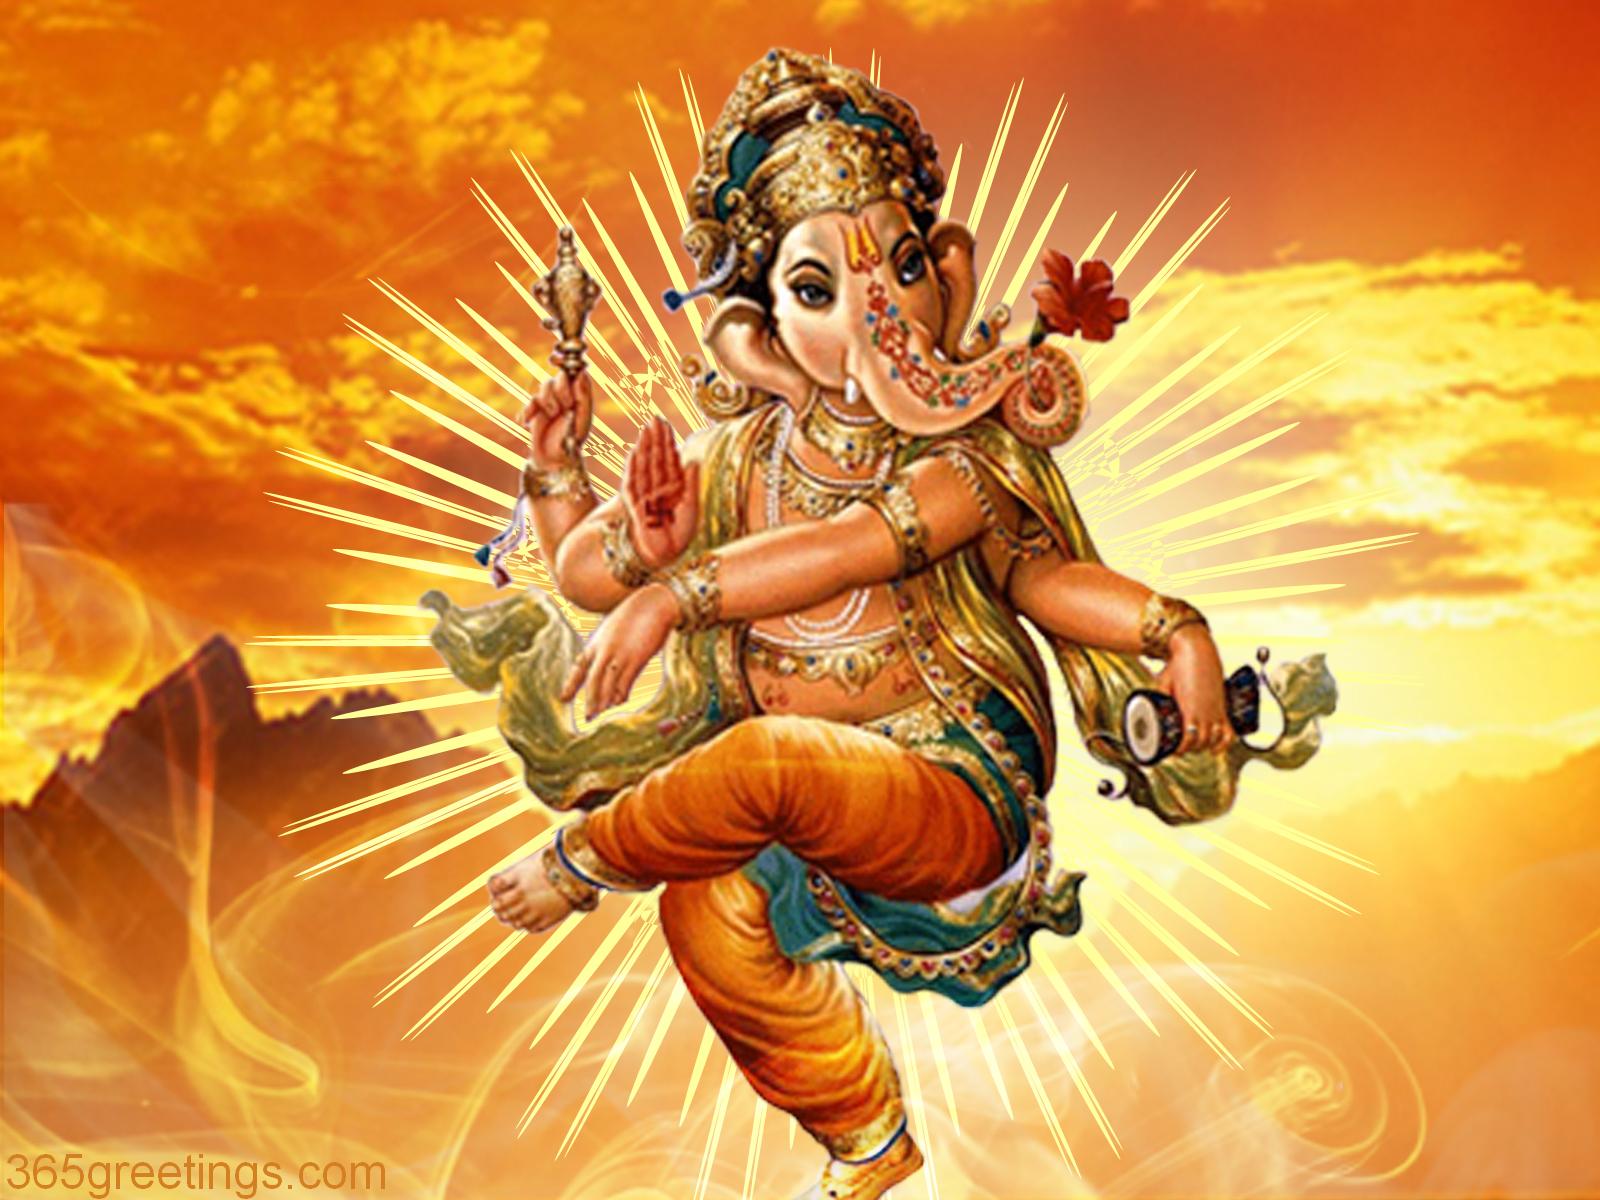 God Ganesh 2017 Hd Images Animated Free Download - Ganesh Chaturthi Images